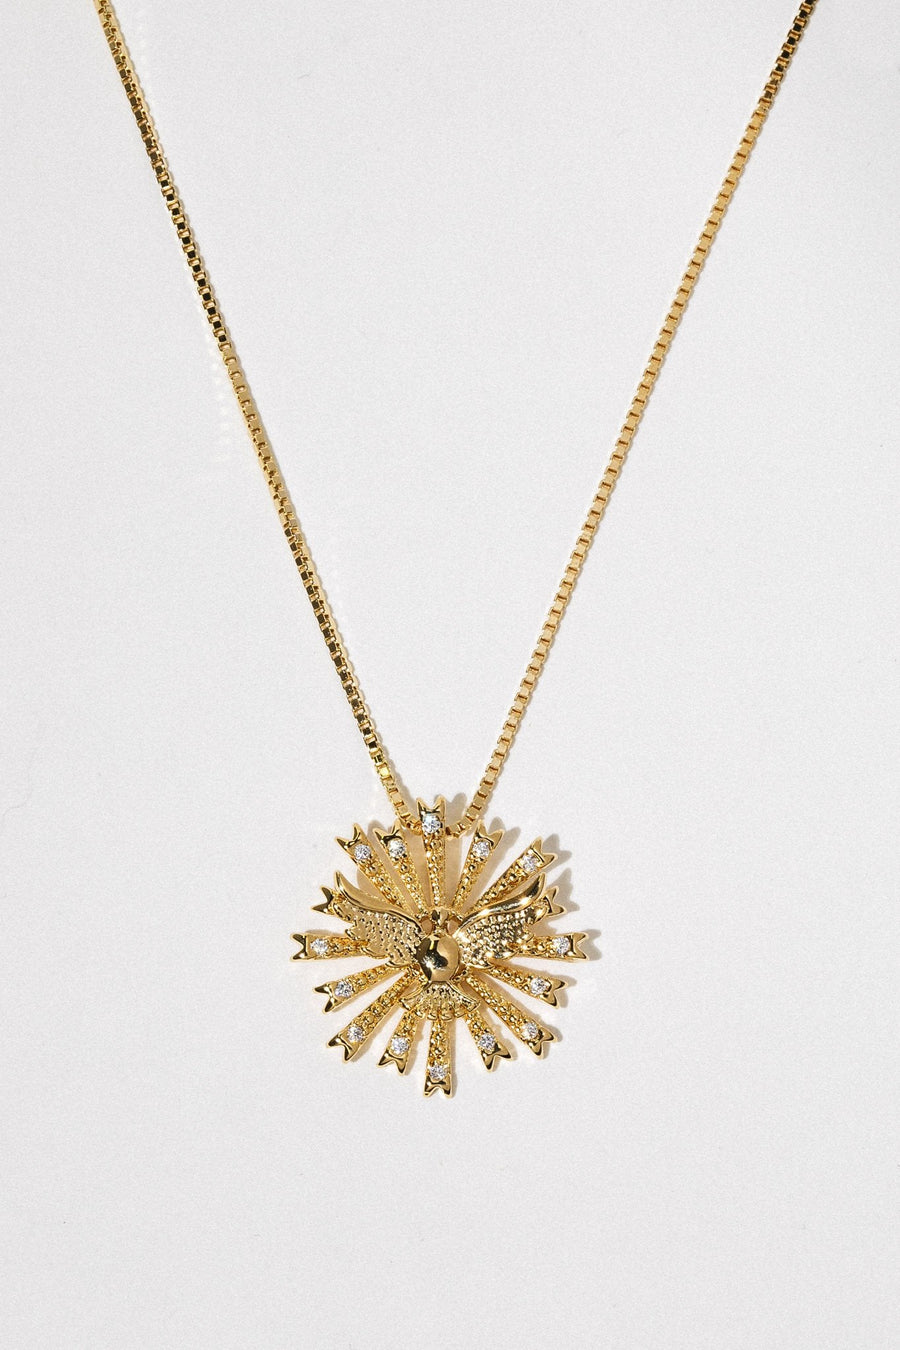 Dona Italia Jewelry 14 Inches / Gold Dove Rays Necklace